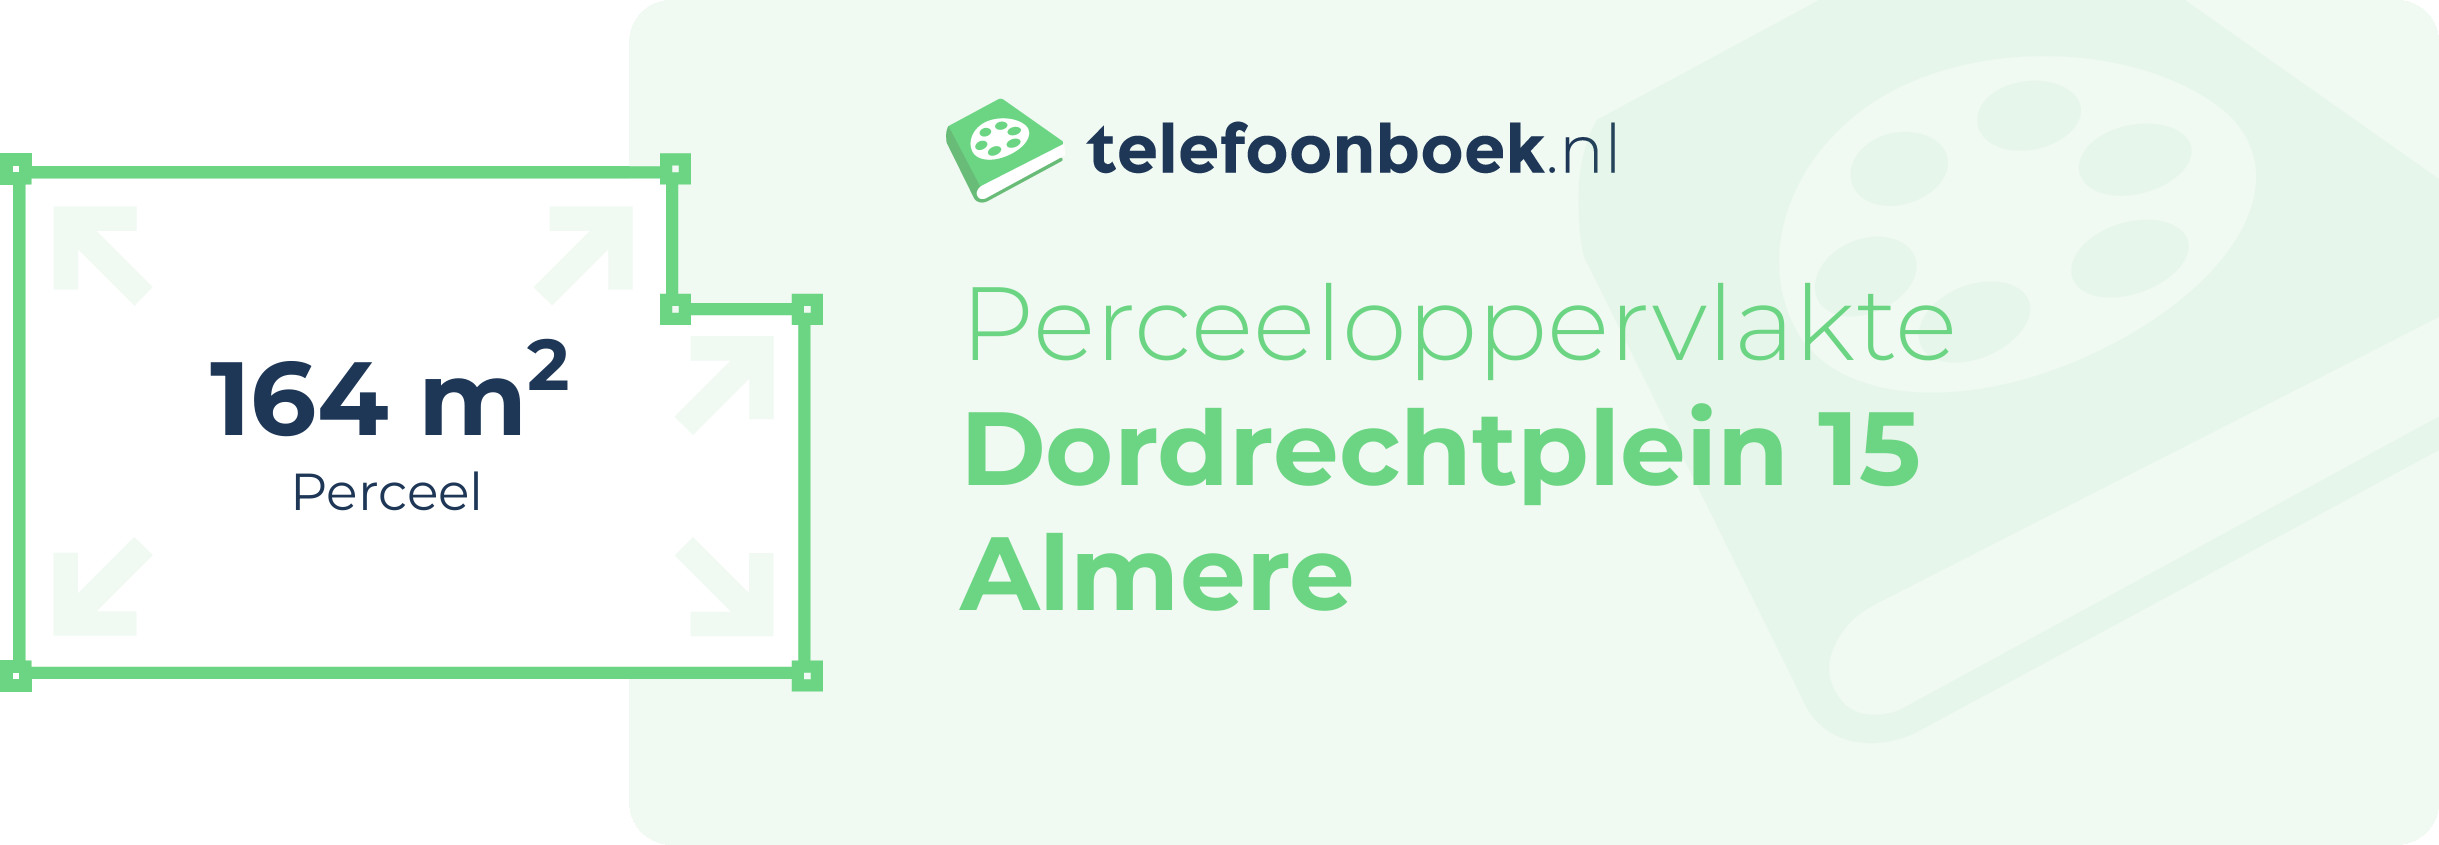 Perceeloppervlakte Dordrechtplein 15 Almere